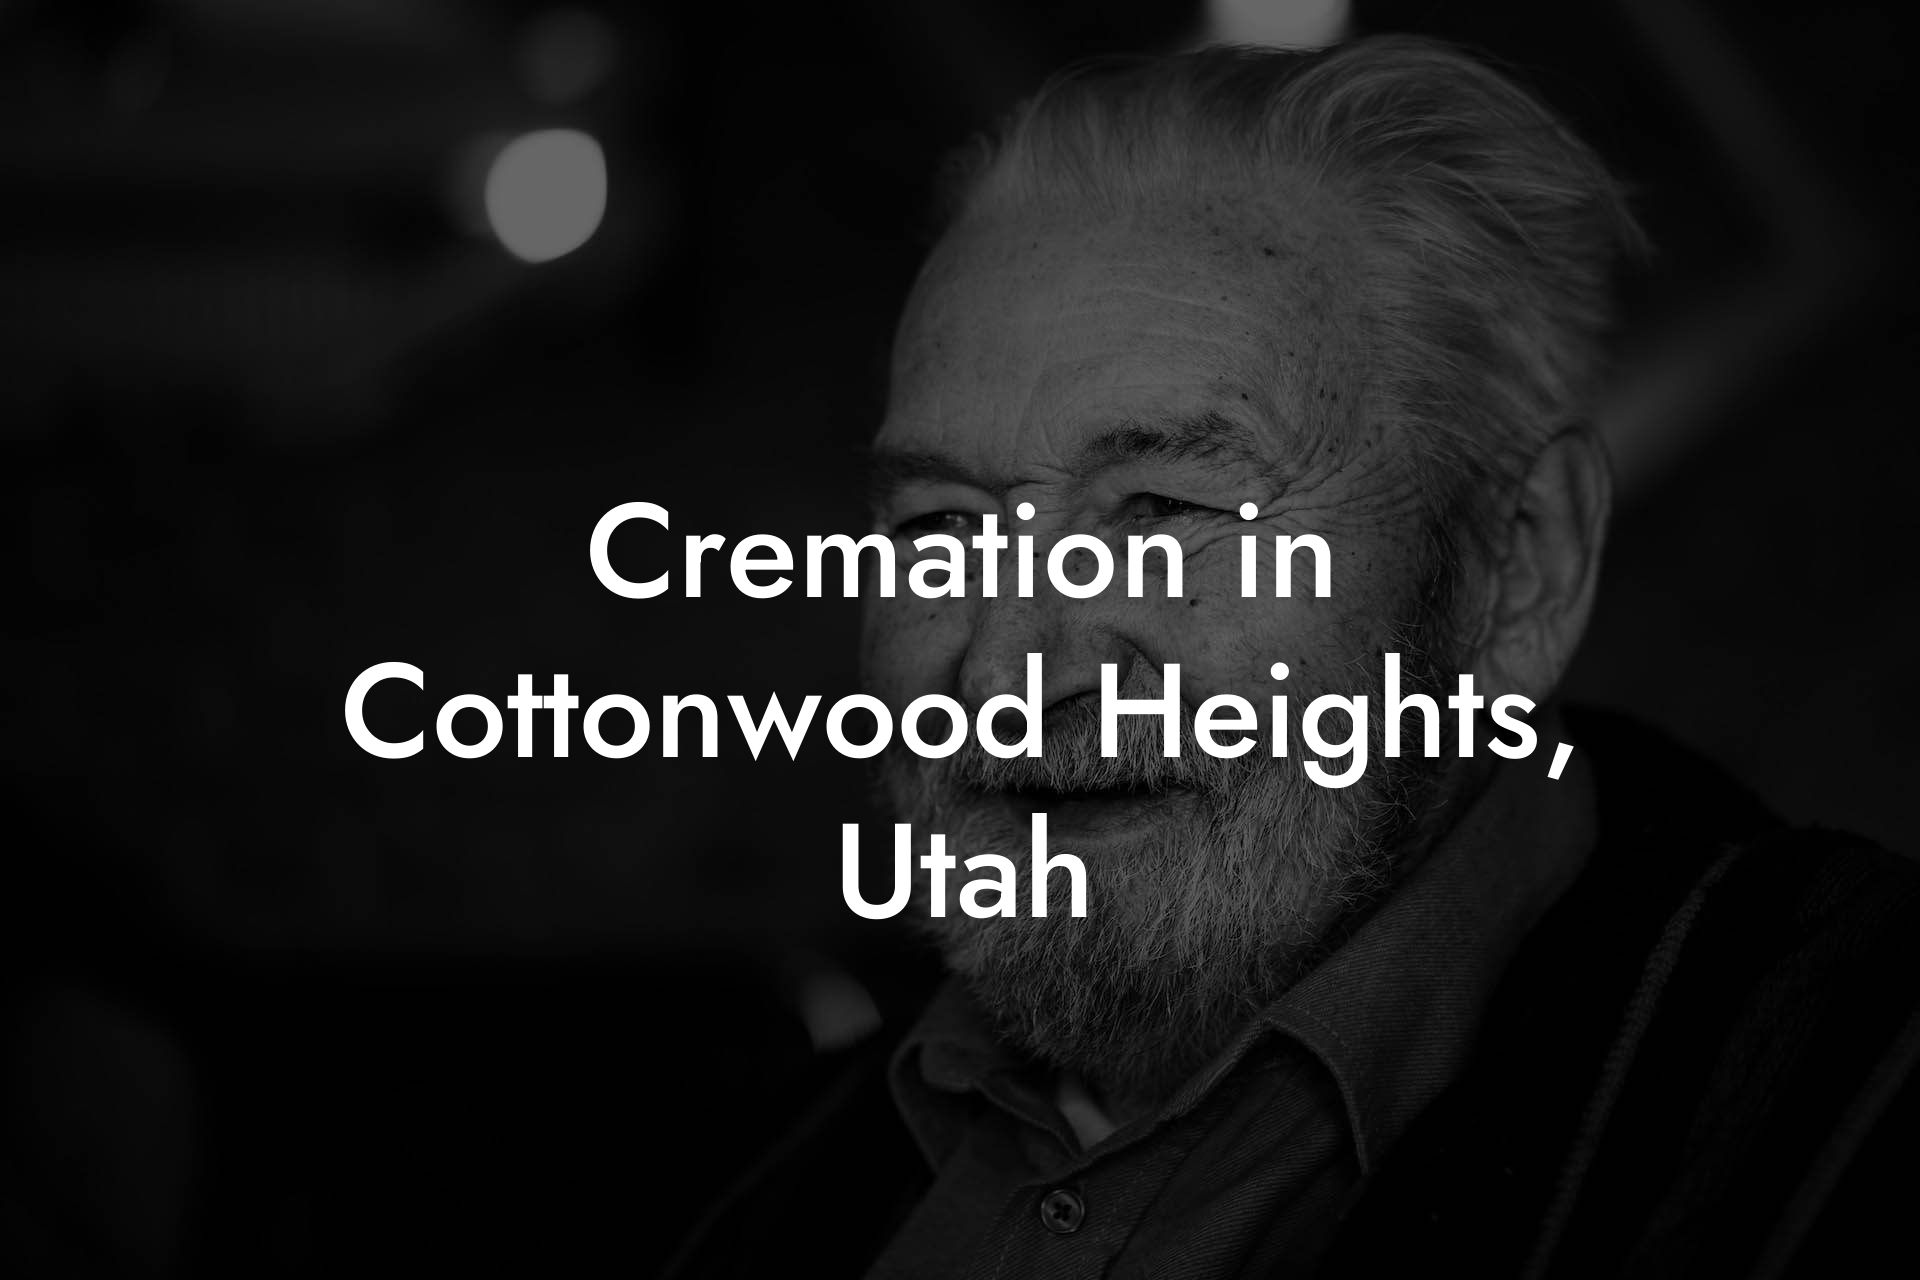 Cremation in Cottonwood Heights, Utah